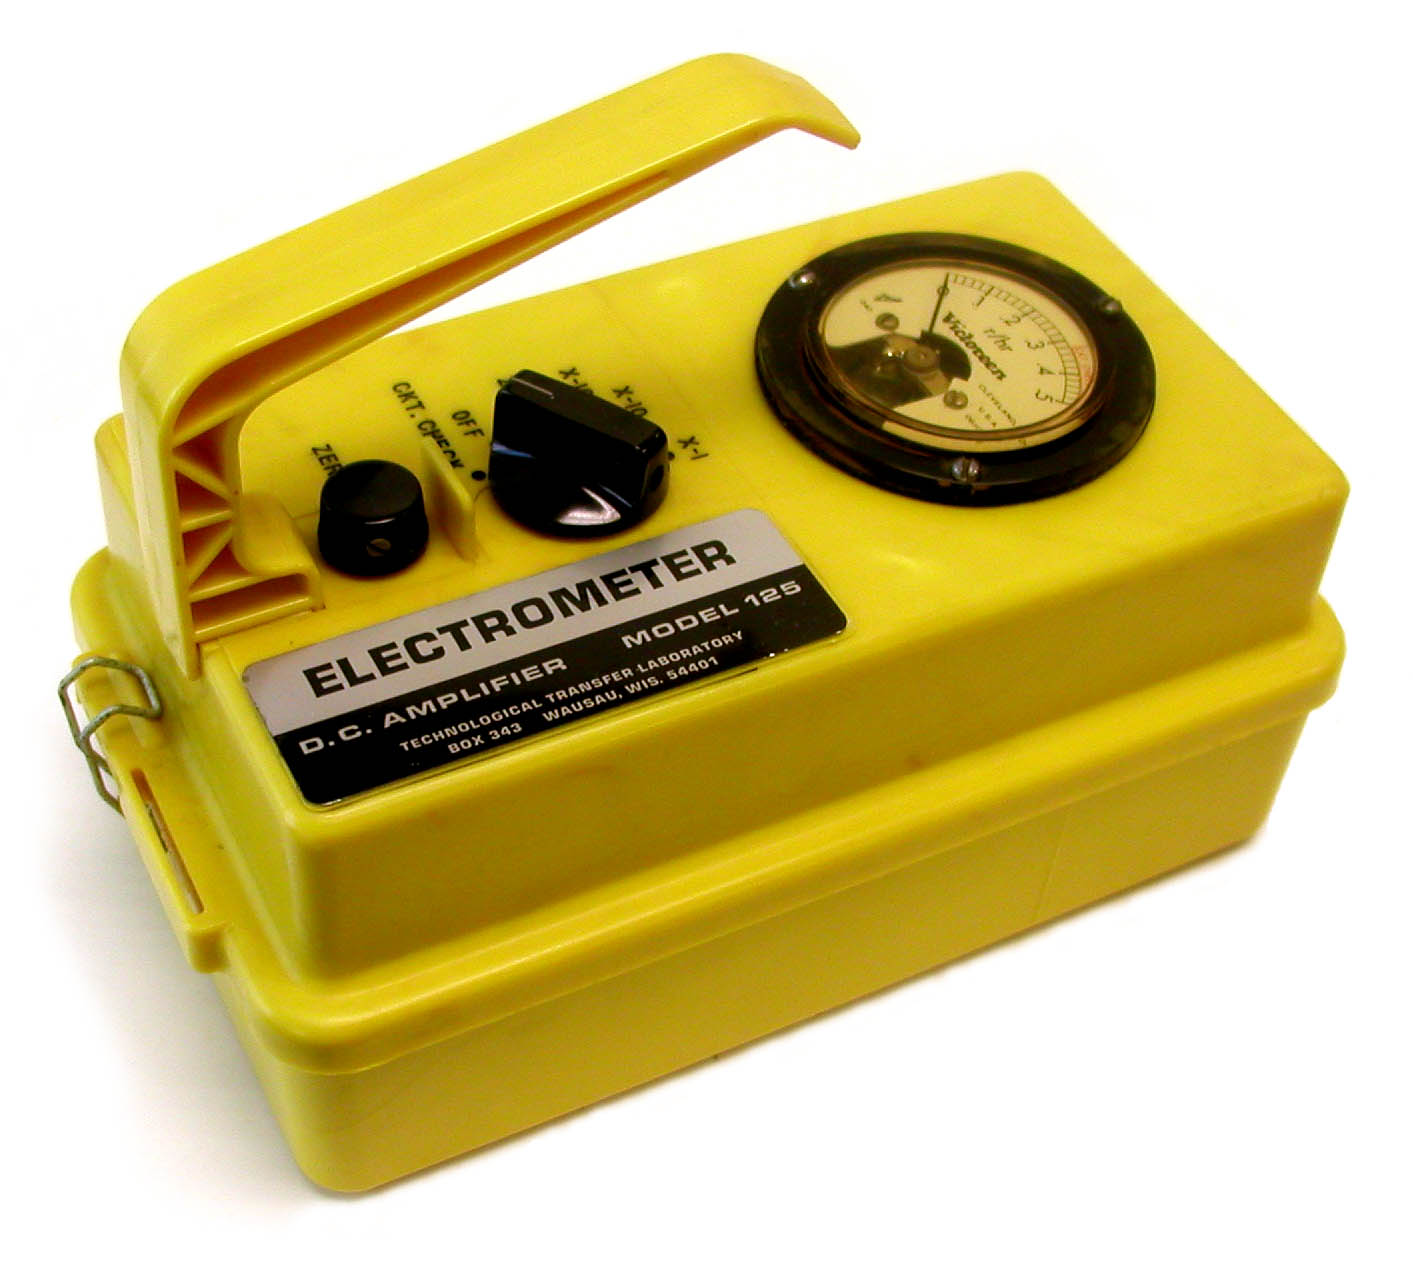 Model 125 Electrometer